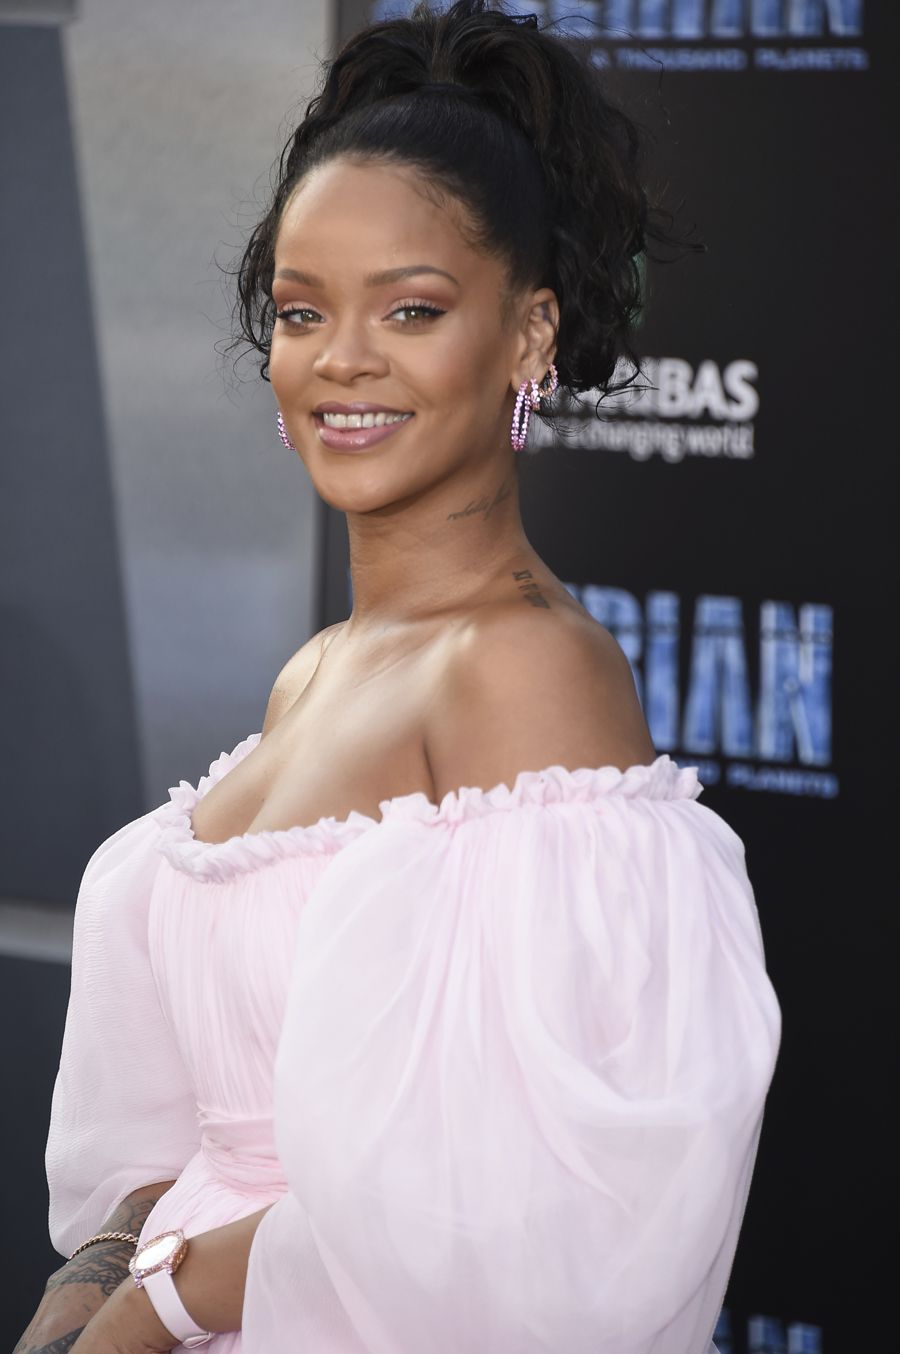 EL 'look beauty' de Rihanna